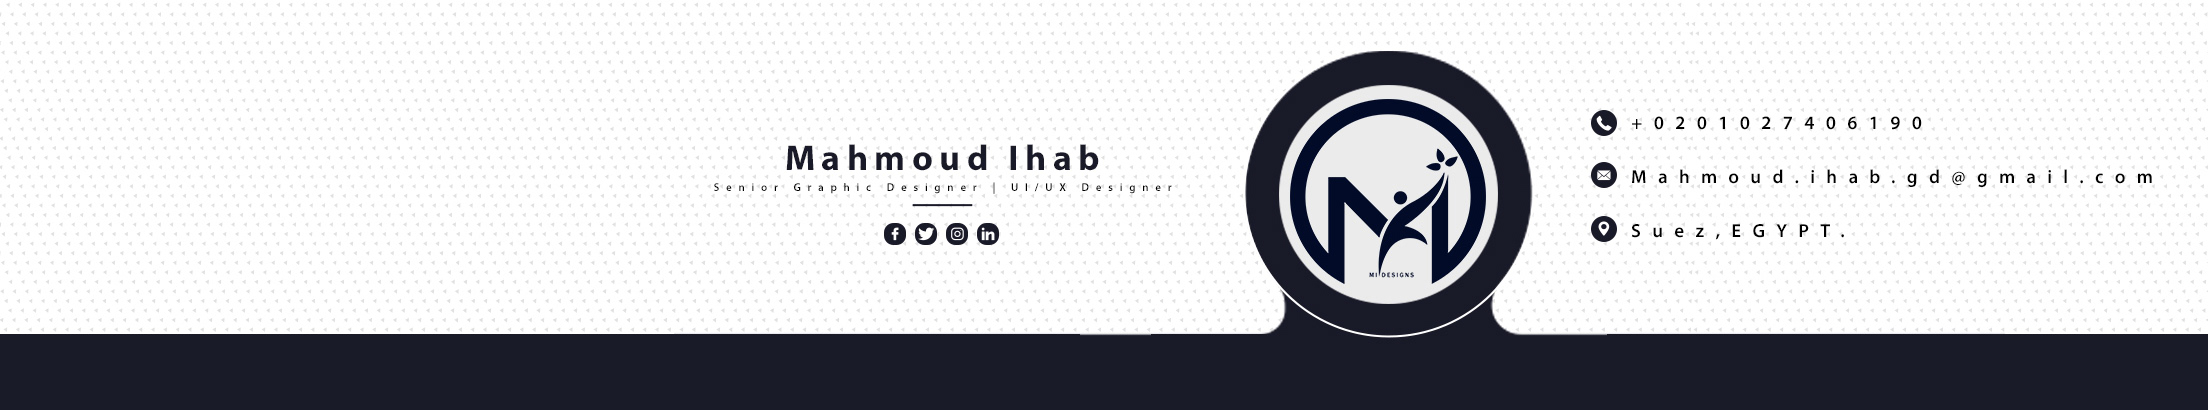 Mahmoud i's profile banner